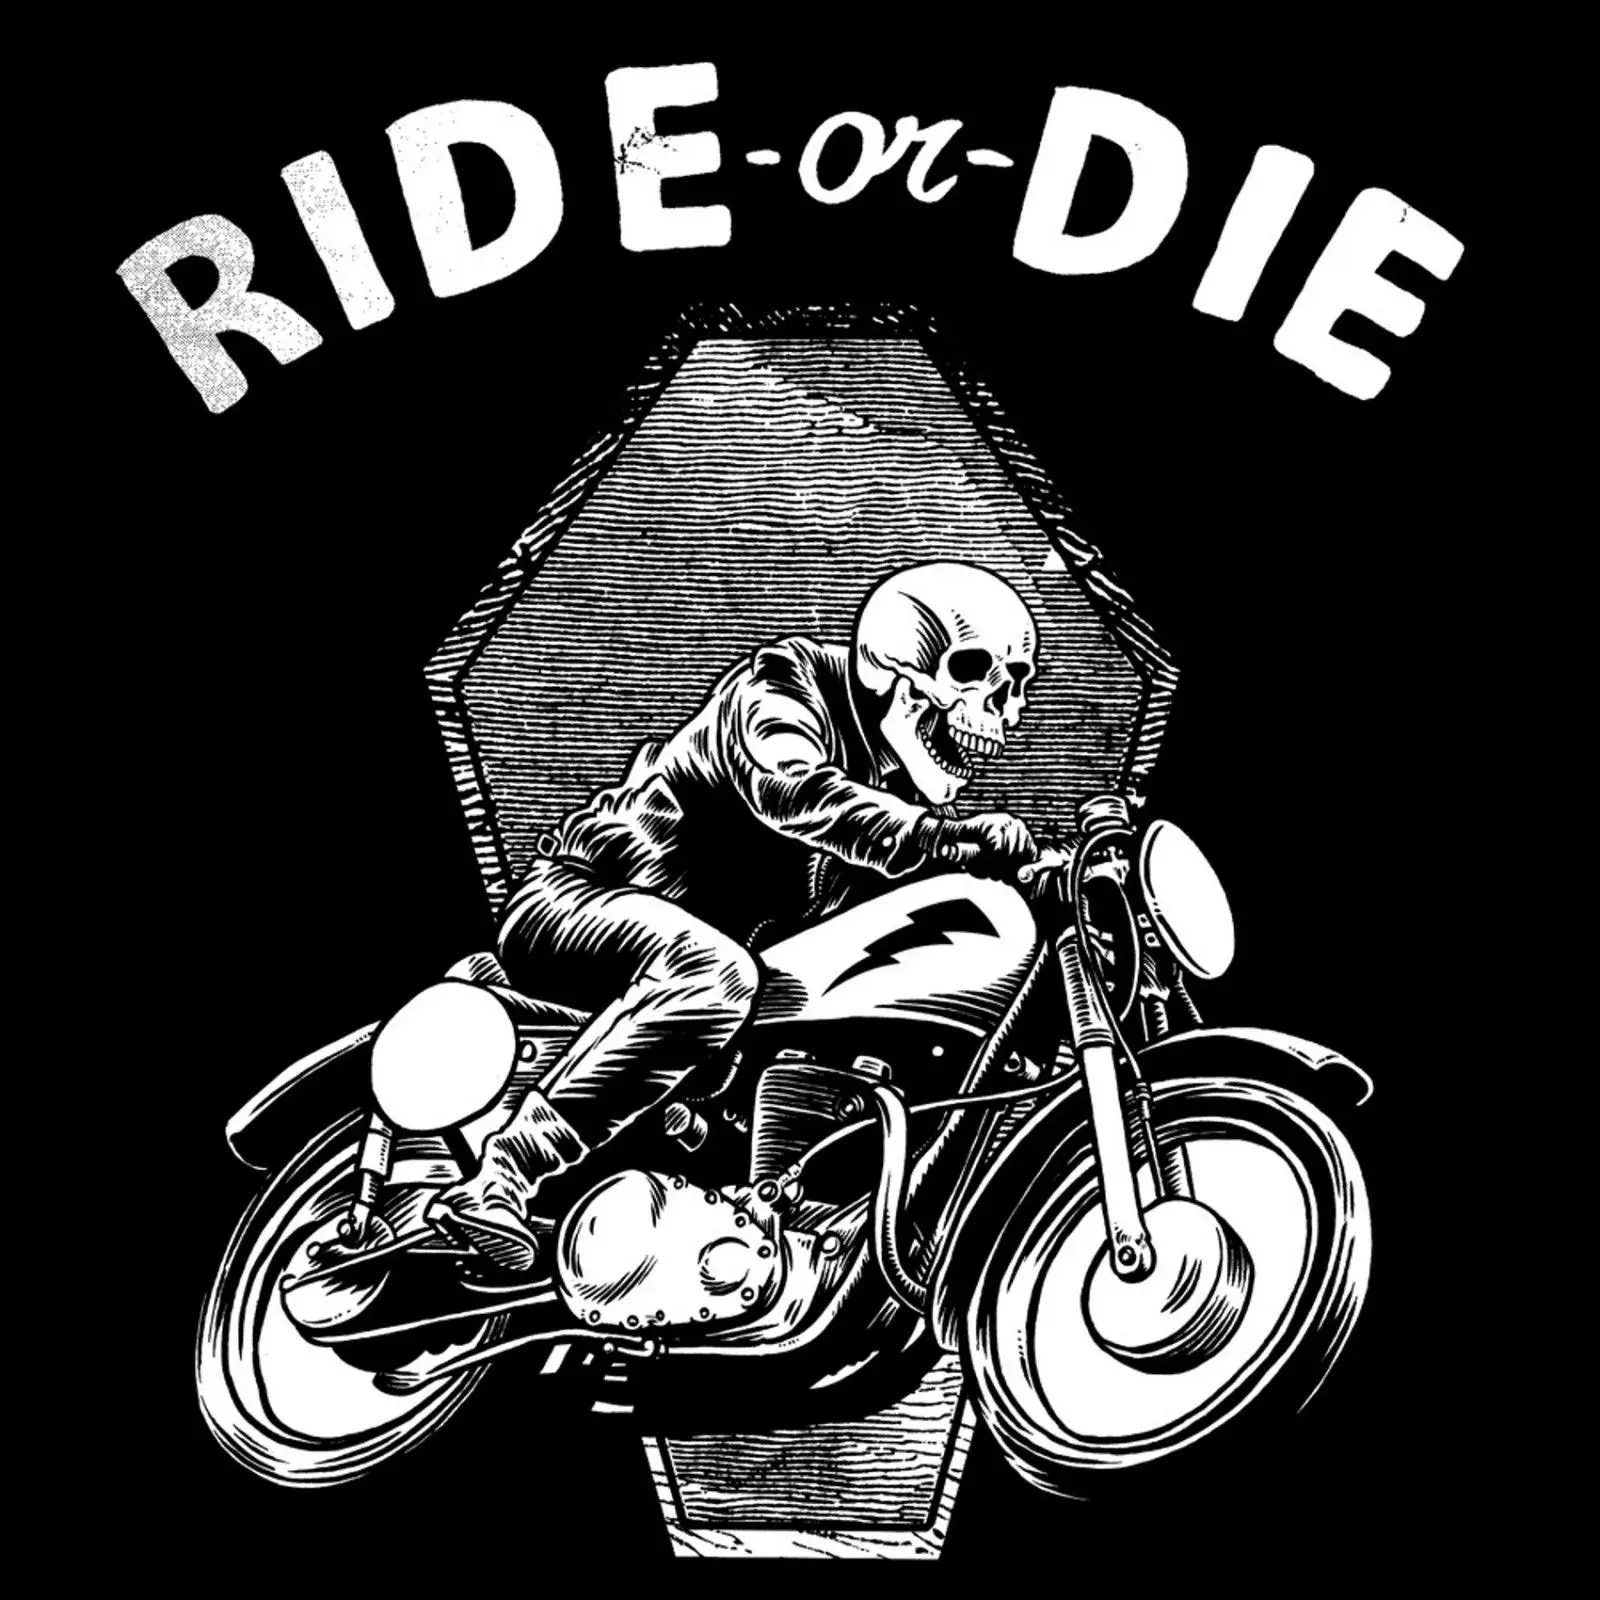 Bad boys ride or die. Ride or die 2pac. Трафарет байкер. Постер мотоцикл. Таьу Ride or die.